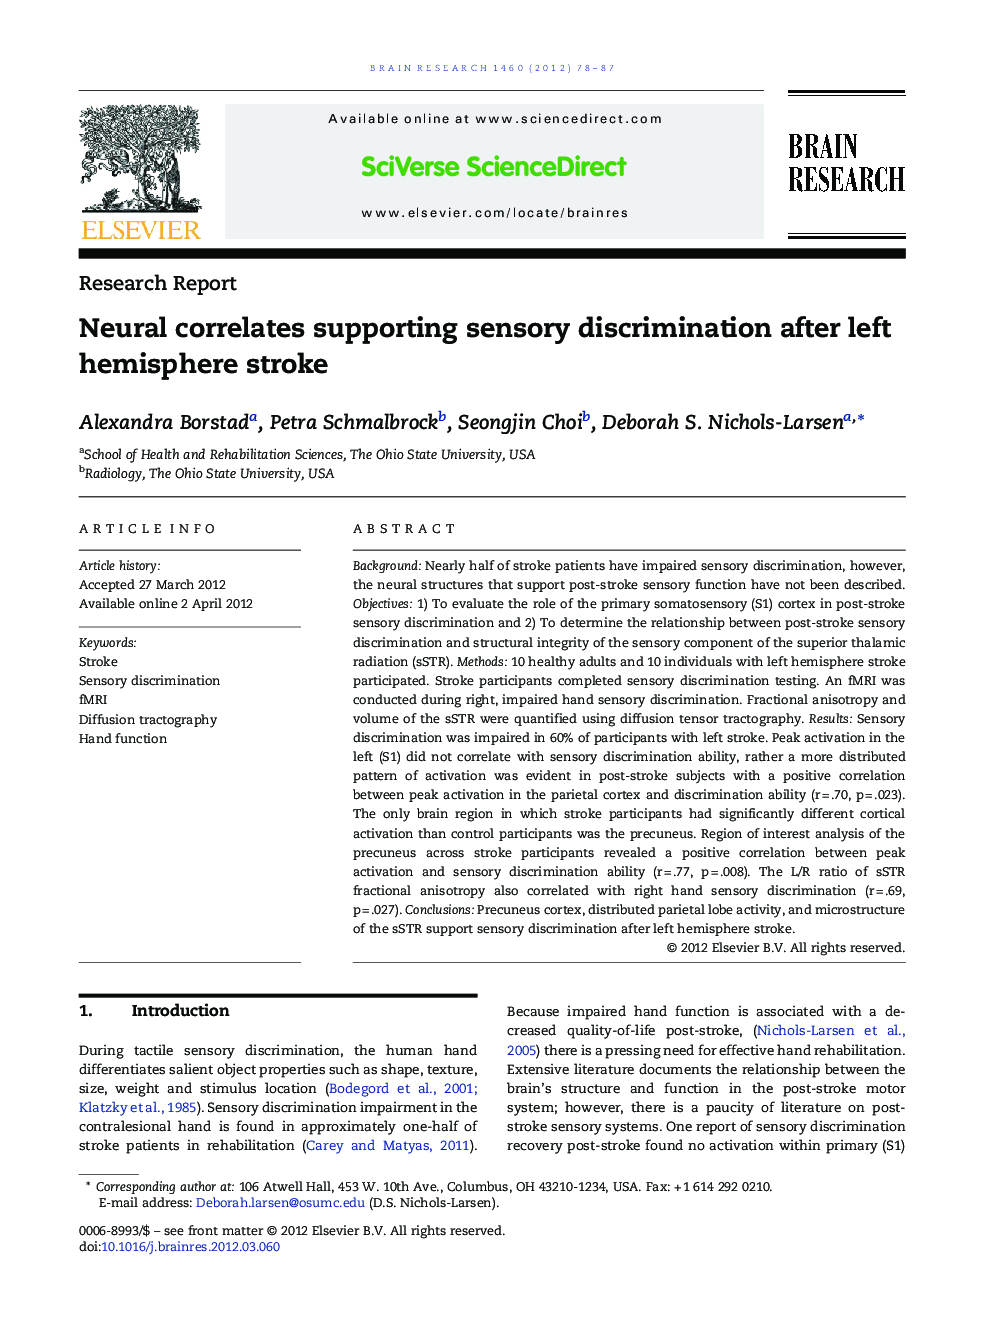 Neural correlates supporting sensory discrimination after left hemisphere stroke